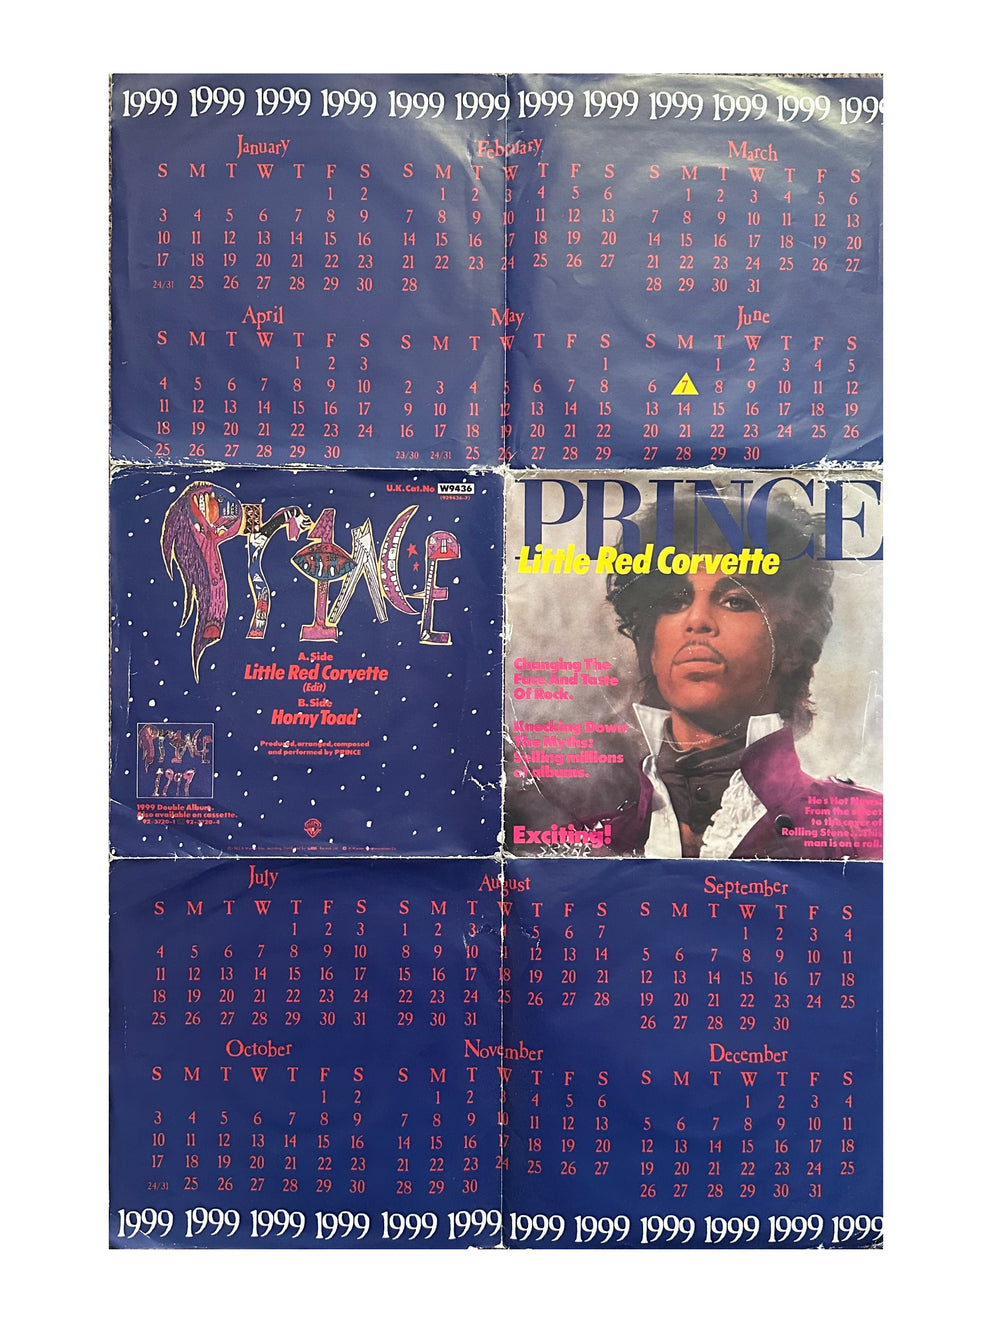 Prince – Little Red Corvette Horny Toad 7" Vinyl Single Poster Sleeve UK Preloved: 1983